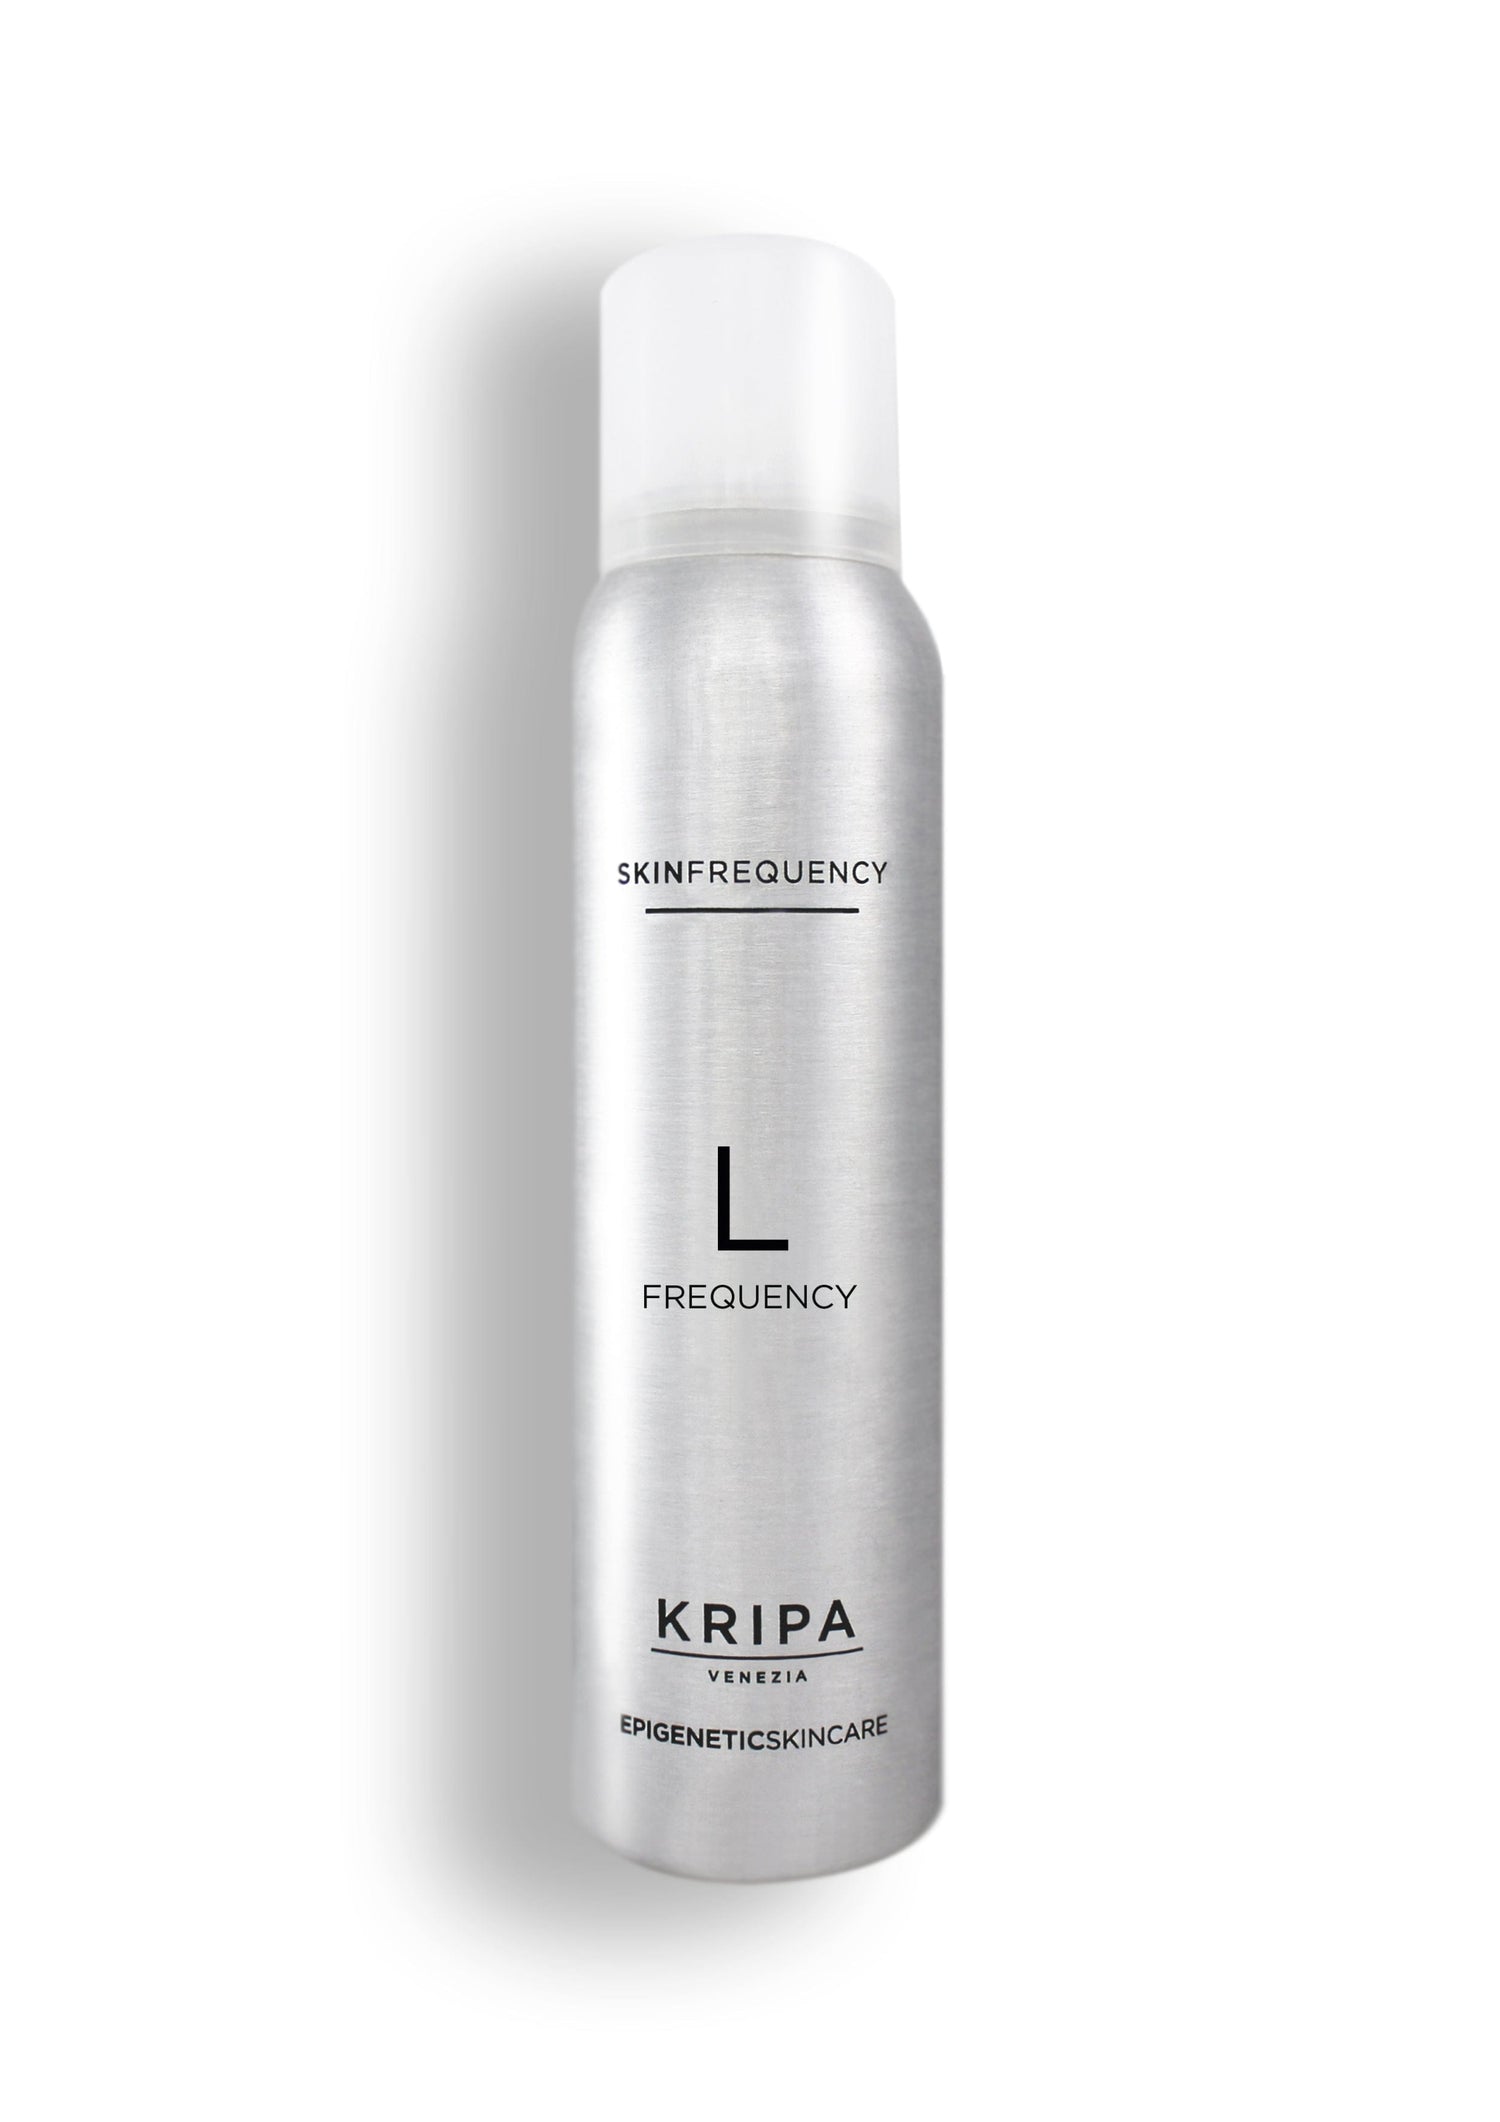 Kripa Cosmetics Australia Beauty : Skin and face serum 150ml Skin Frequency Serum Spray "L"